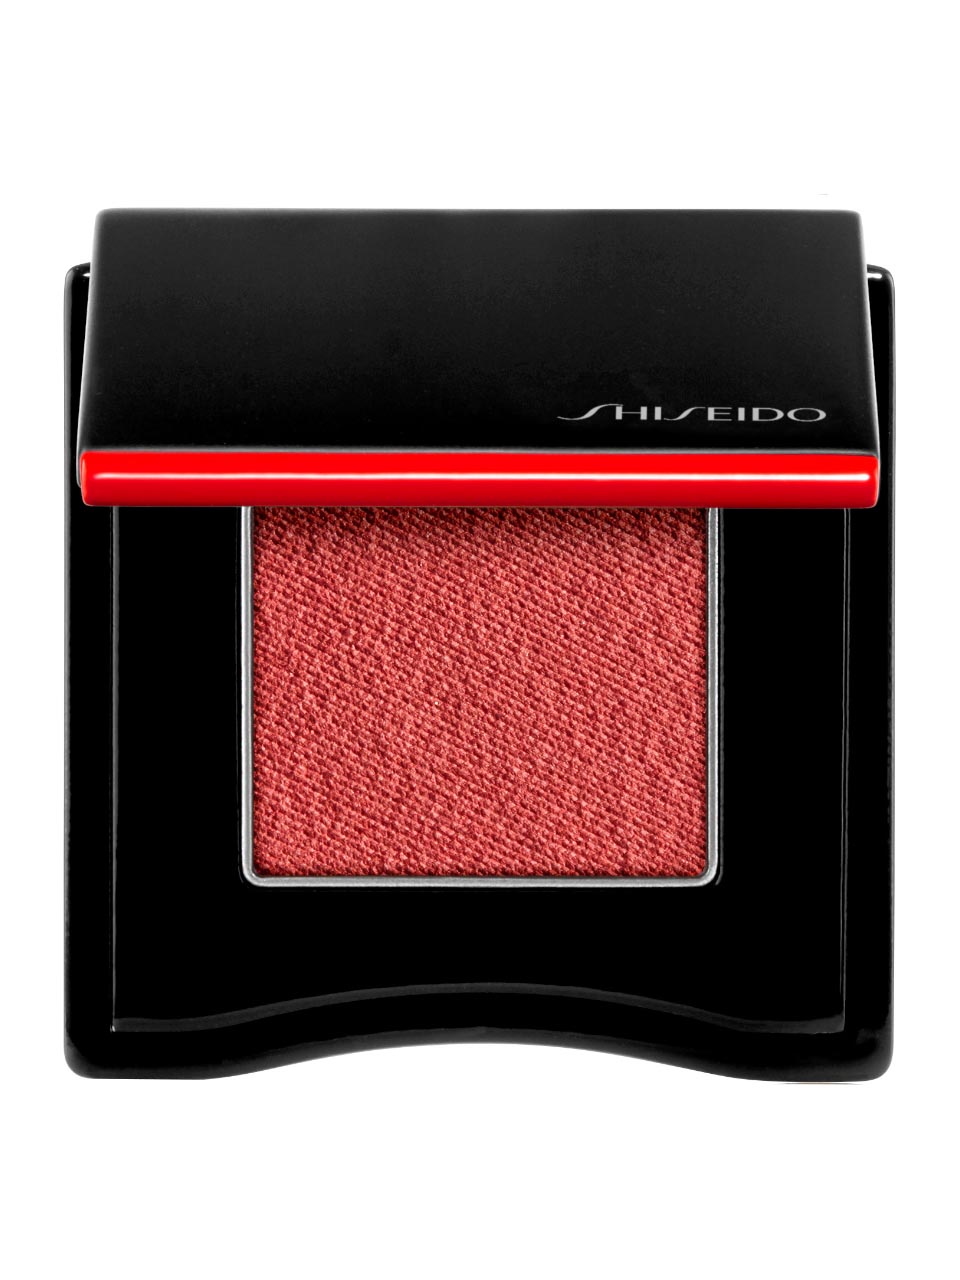 Shiseido Make-Up Pop Powdergel Eye Shadow N° 03 Fuwa-Fuwa Peach null - onesize - 1